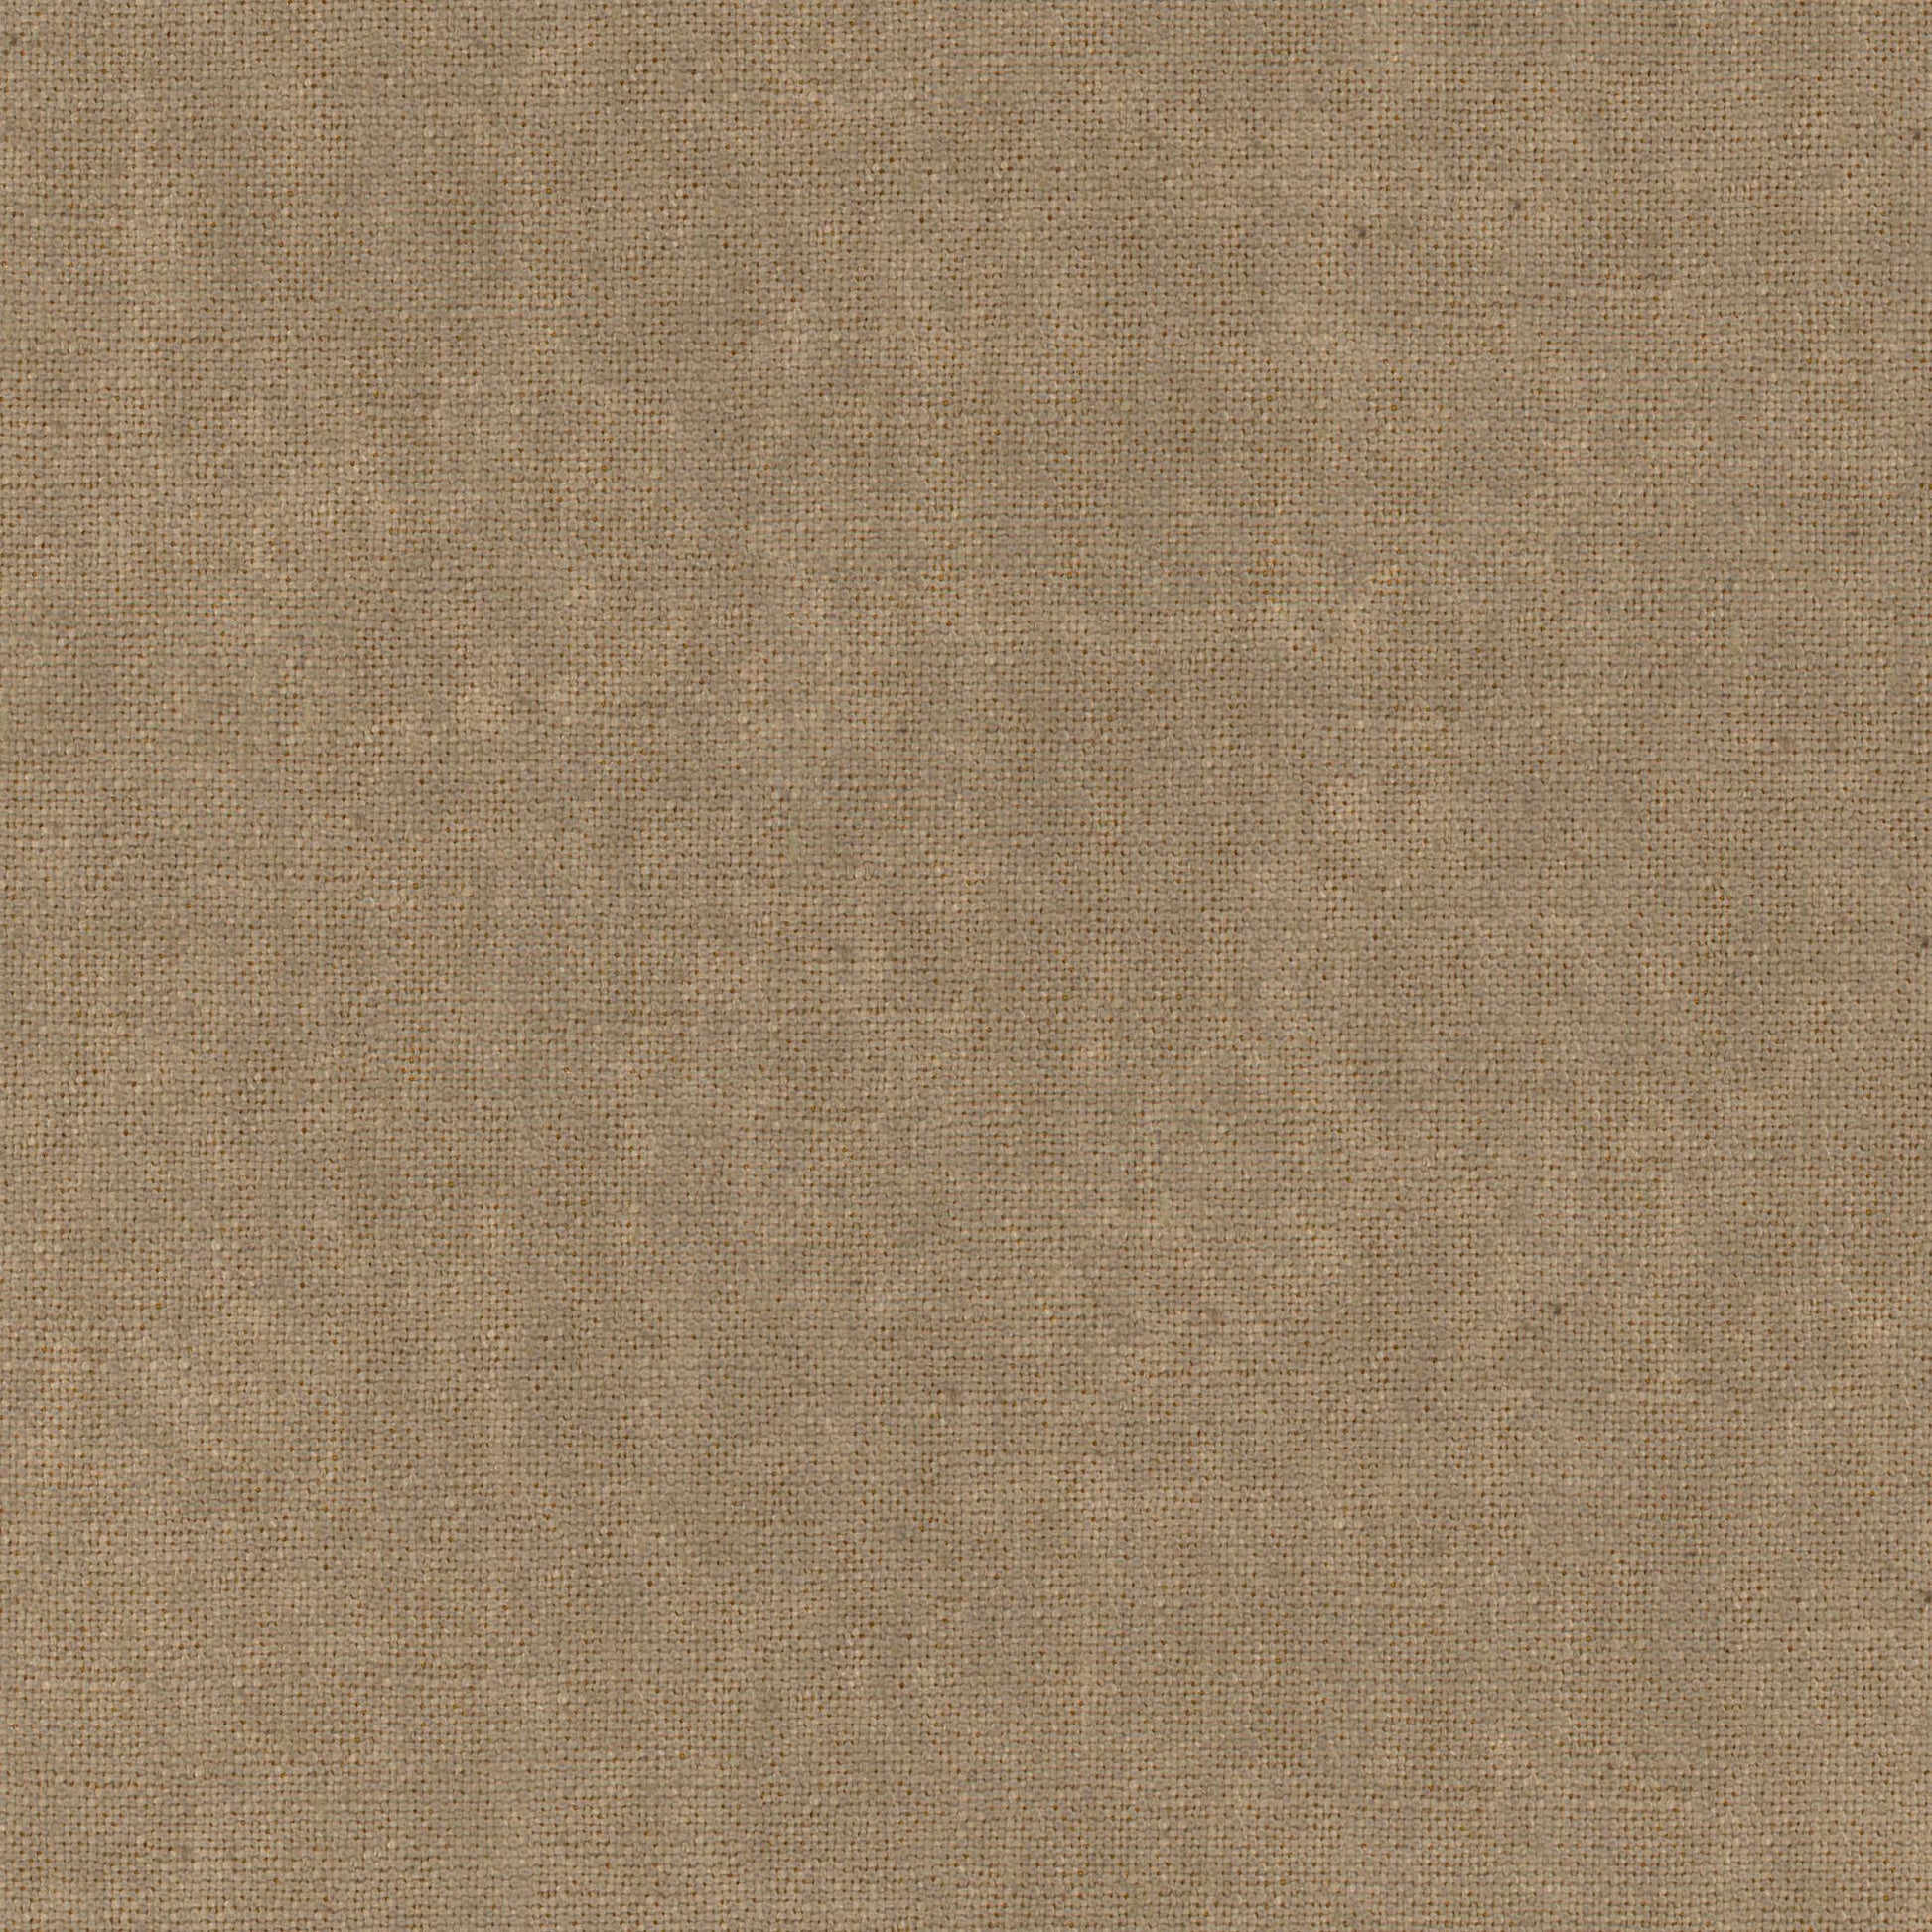 Home Fabrics - FibreGuard - Monterey - 20-Java - Fabric per Meter